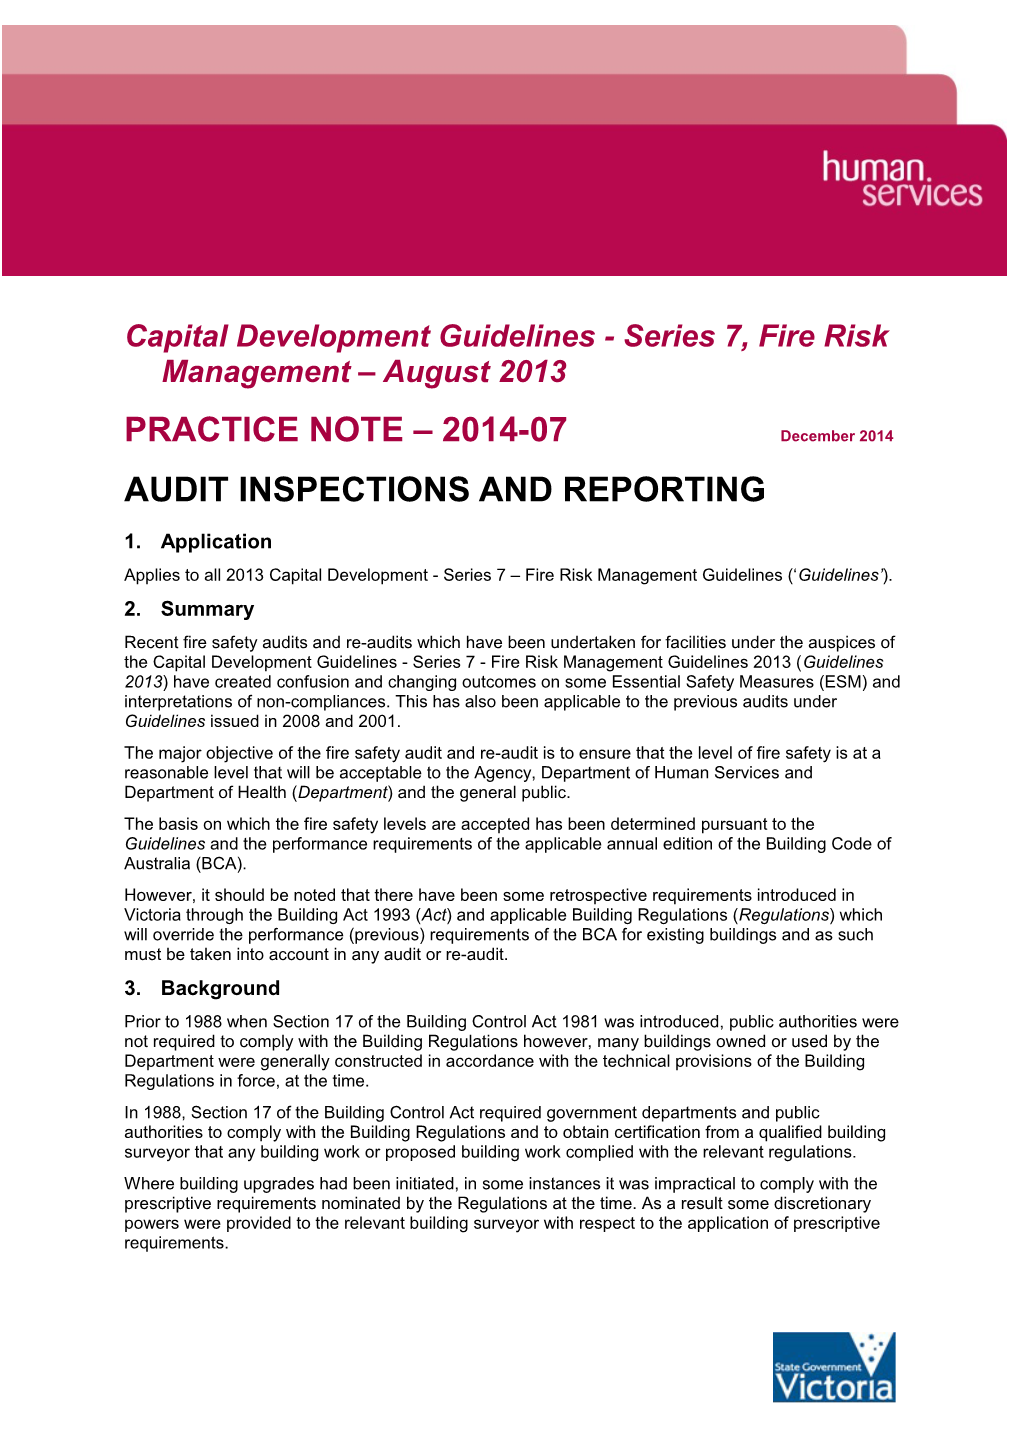 Capital Development Guidelines - Series 7, Fire Risk Management August 2013